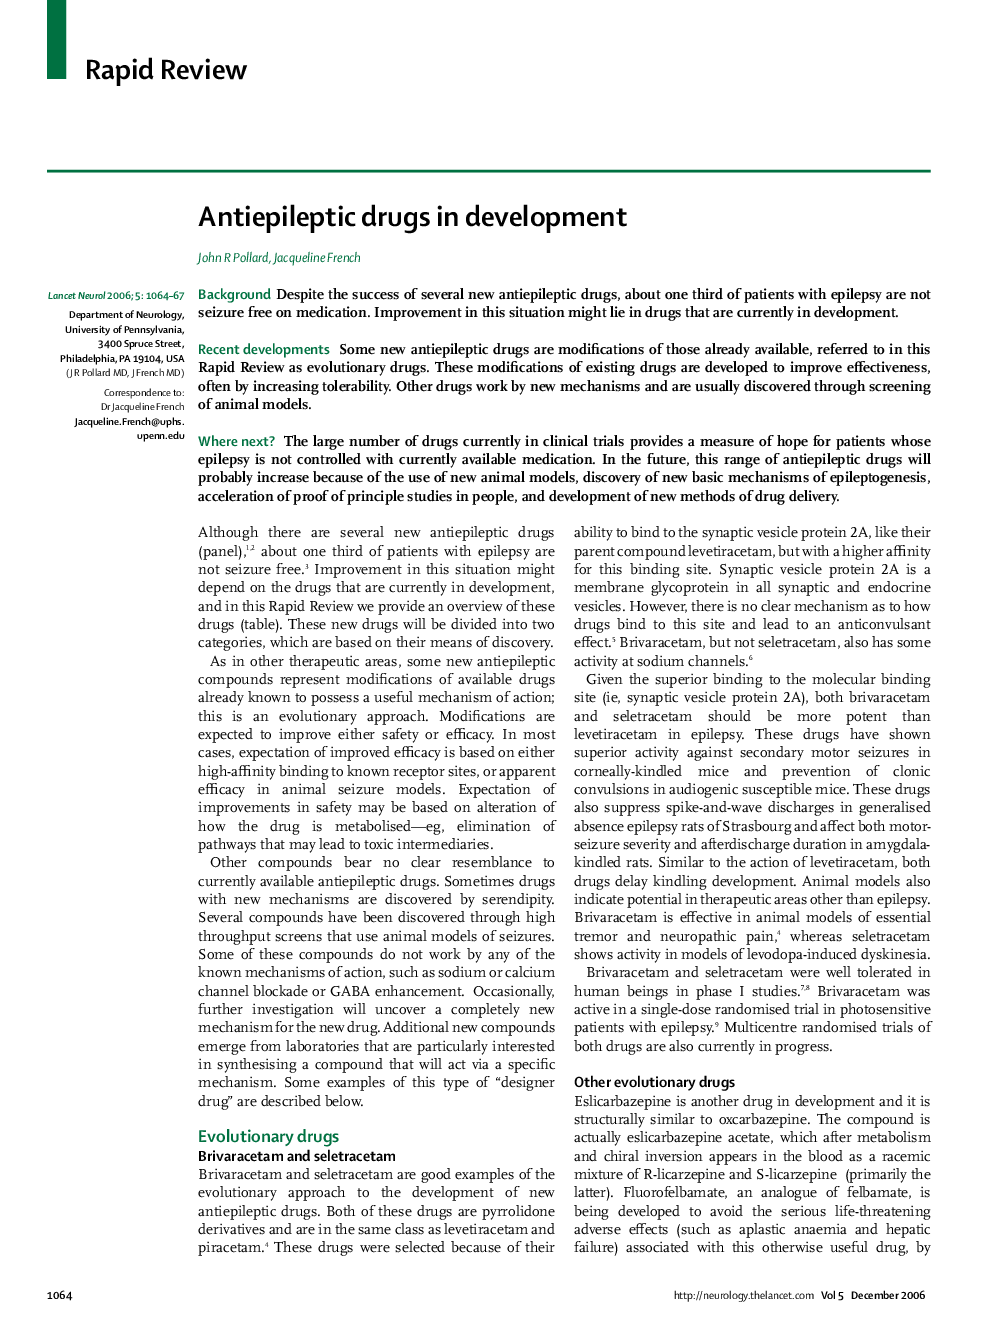 Antiepileptic drugs in development